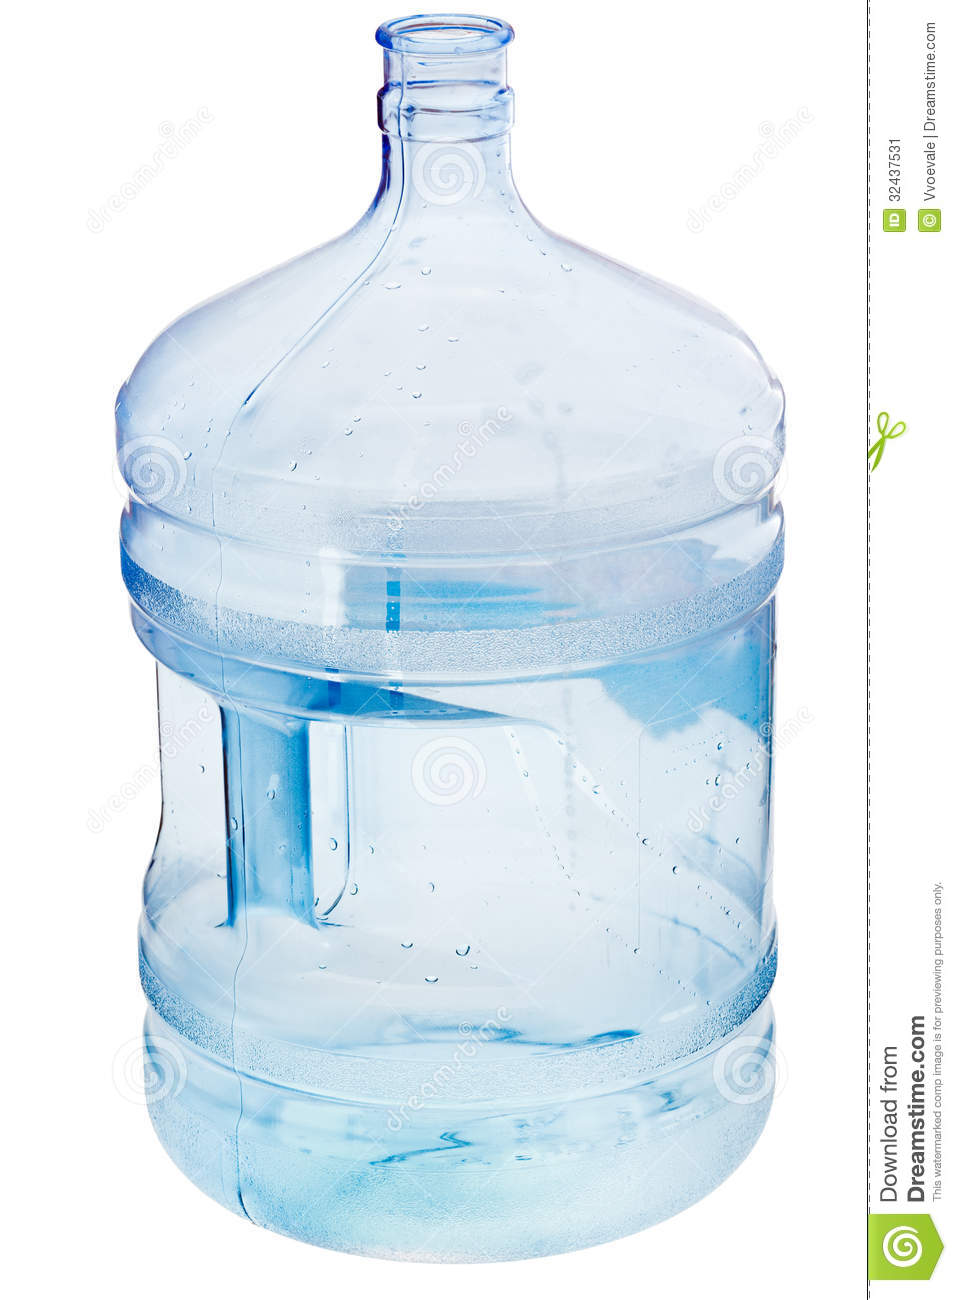 Gallon Water Bottle Stock Image   Image  32437531